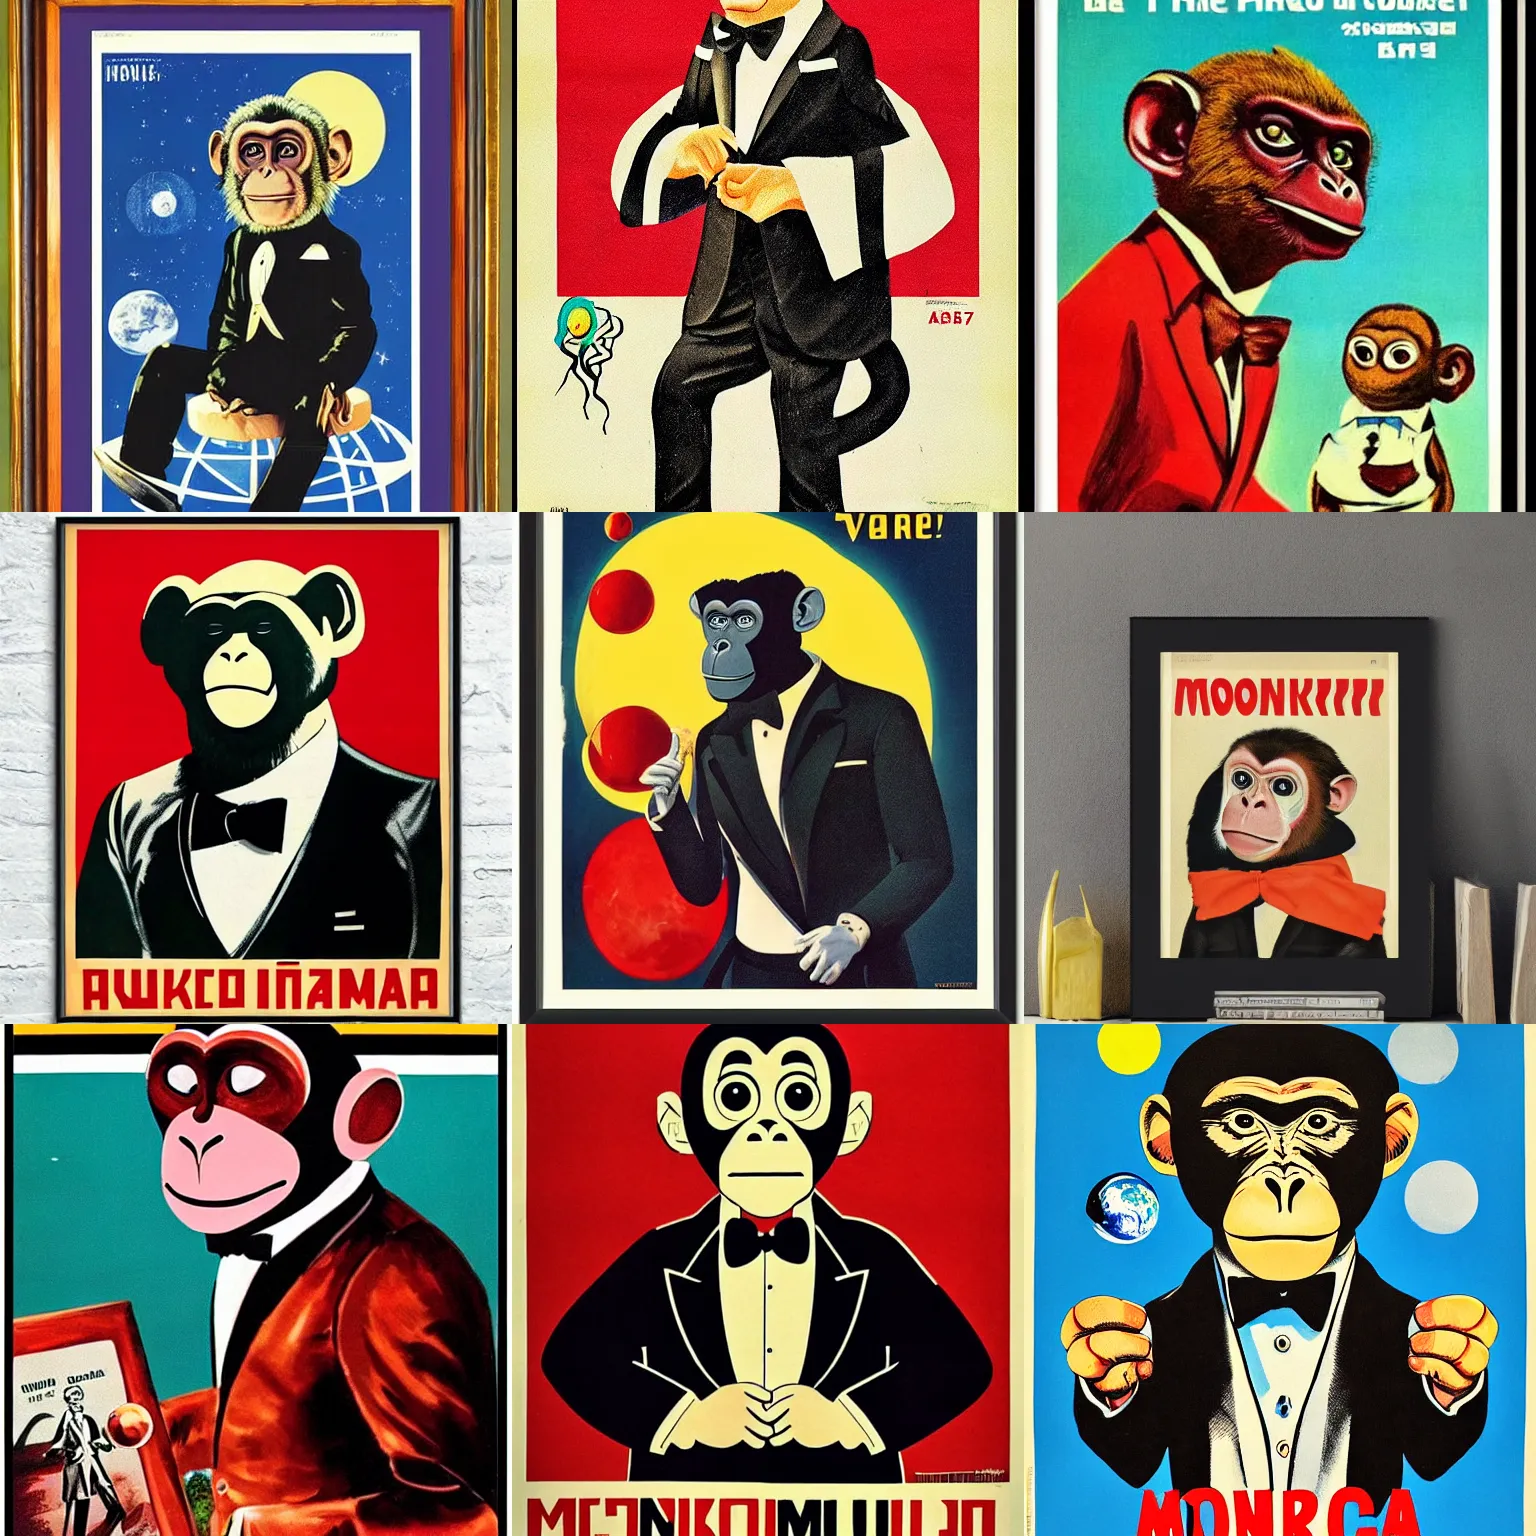 Prompt: Monkey in tuxedo portrait, planet mars, 60s poster, 1972 Soviet